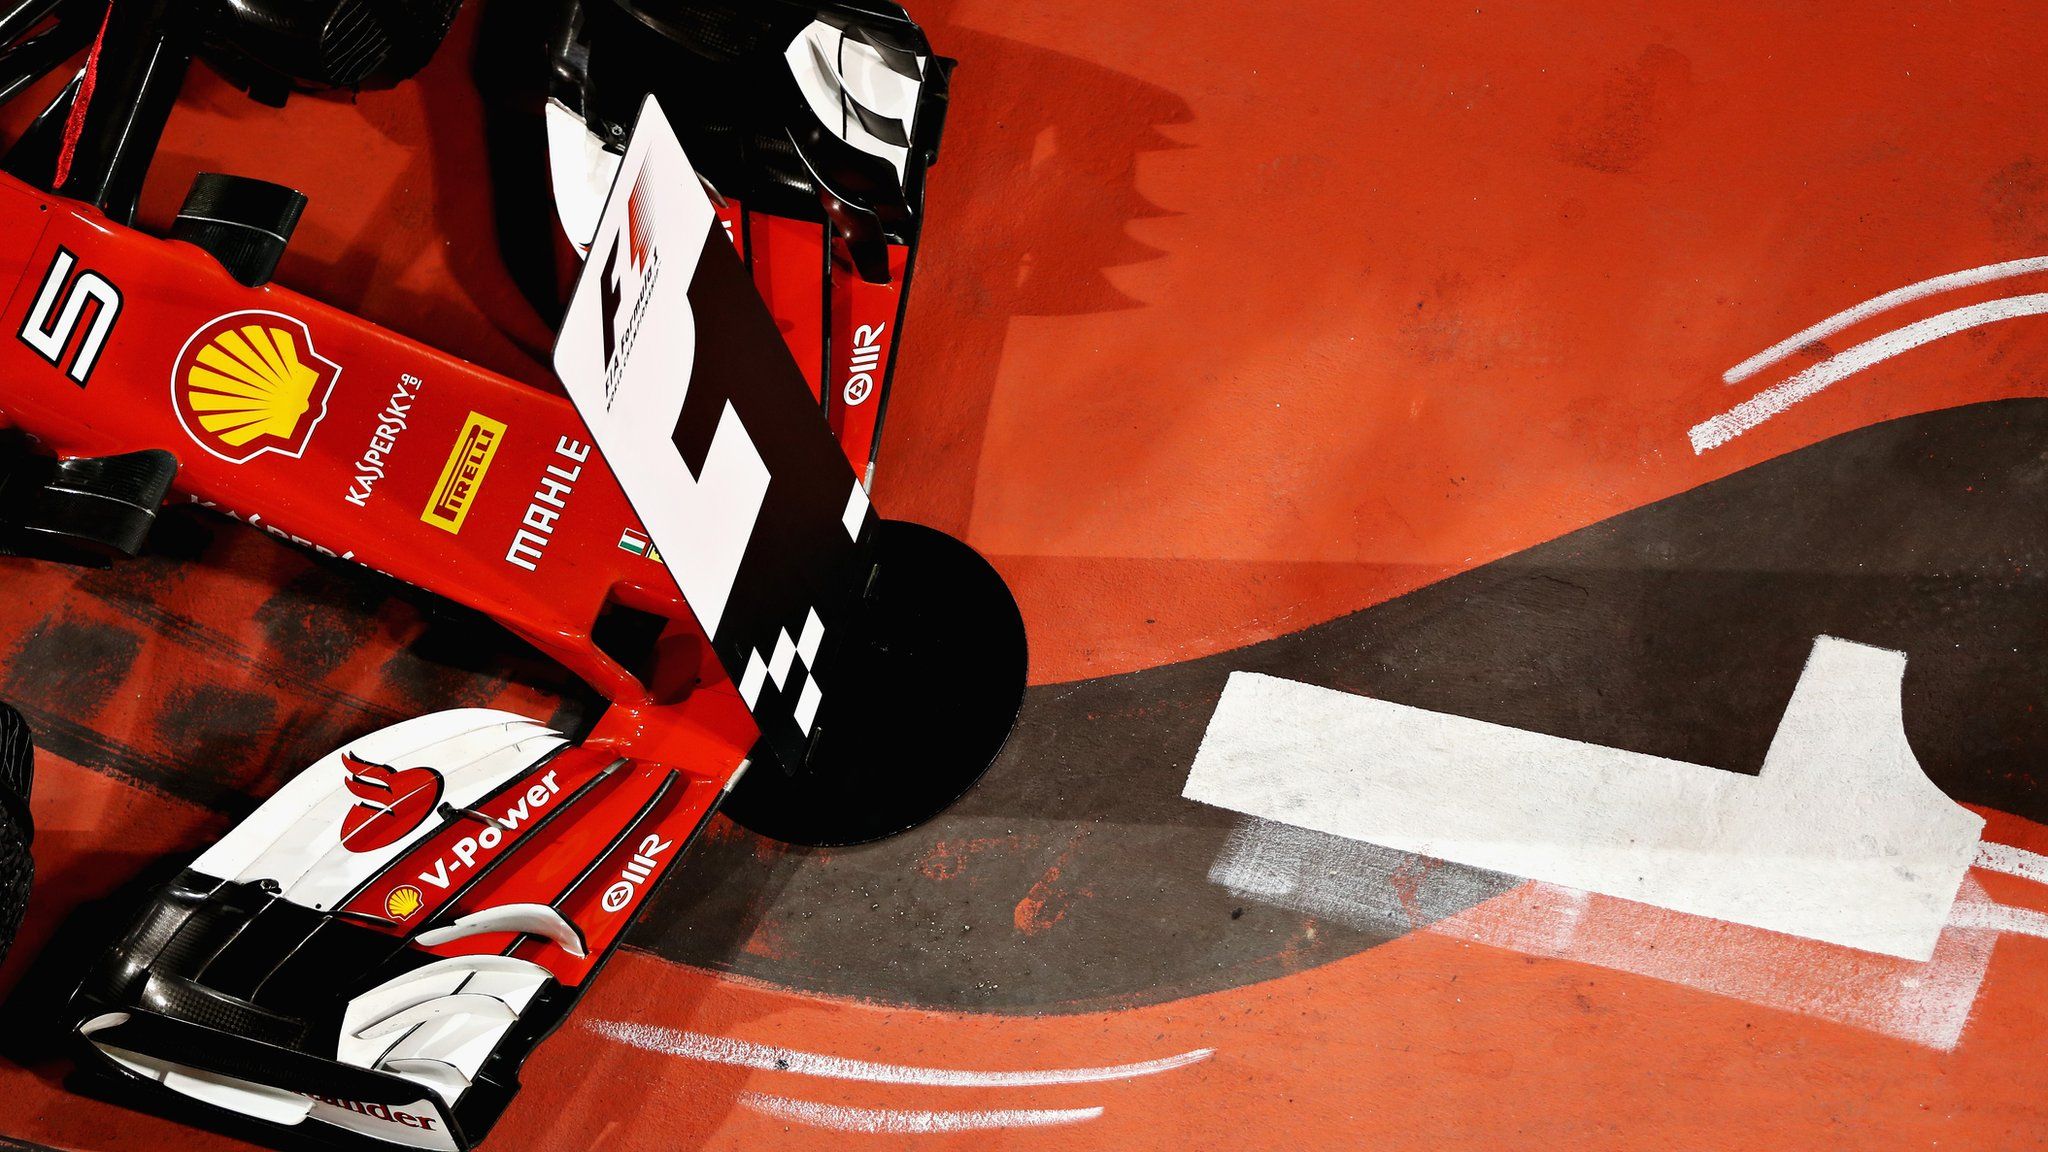 Sebastian Vettel wins the 2017 Bahrain Grand Prix